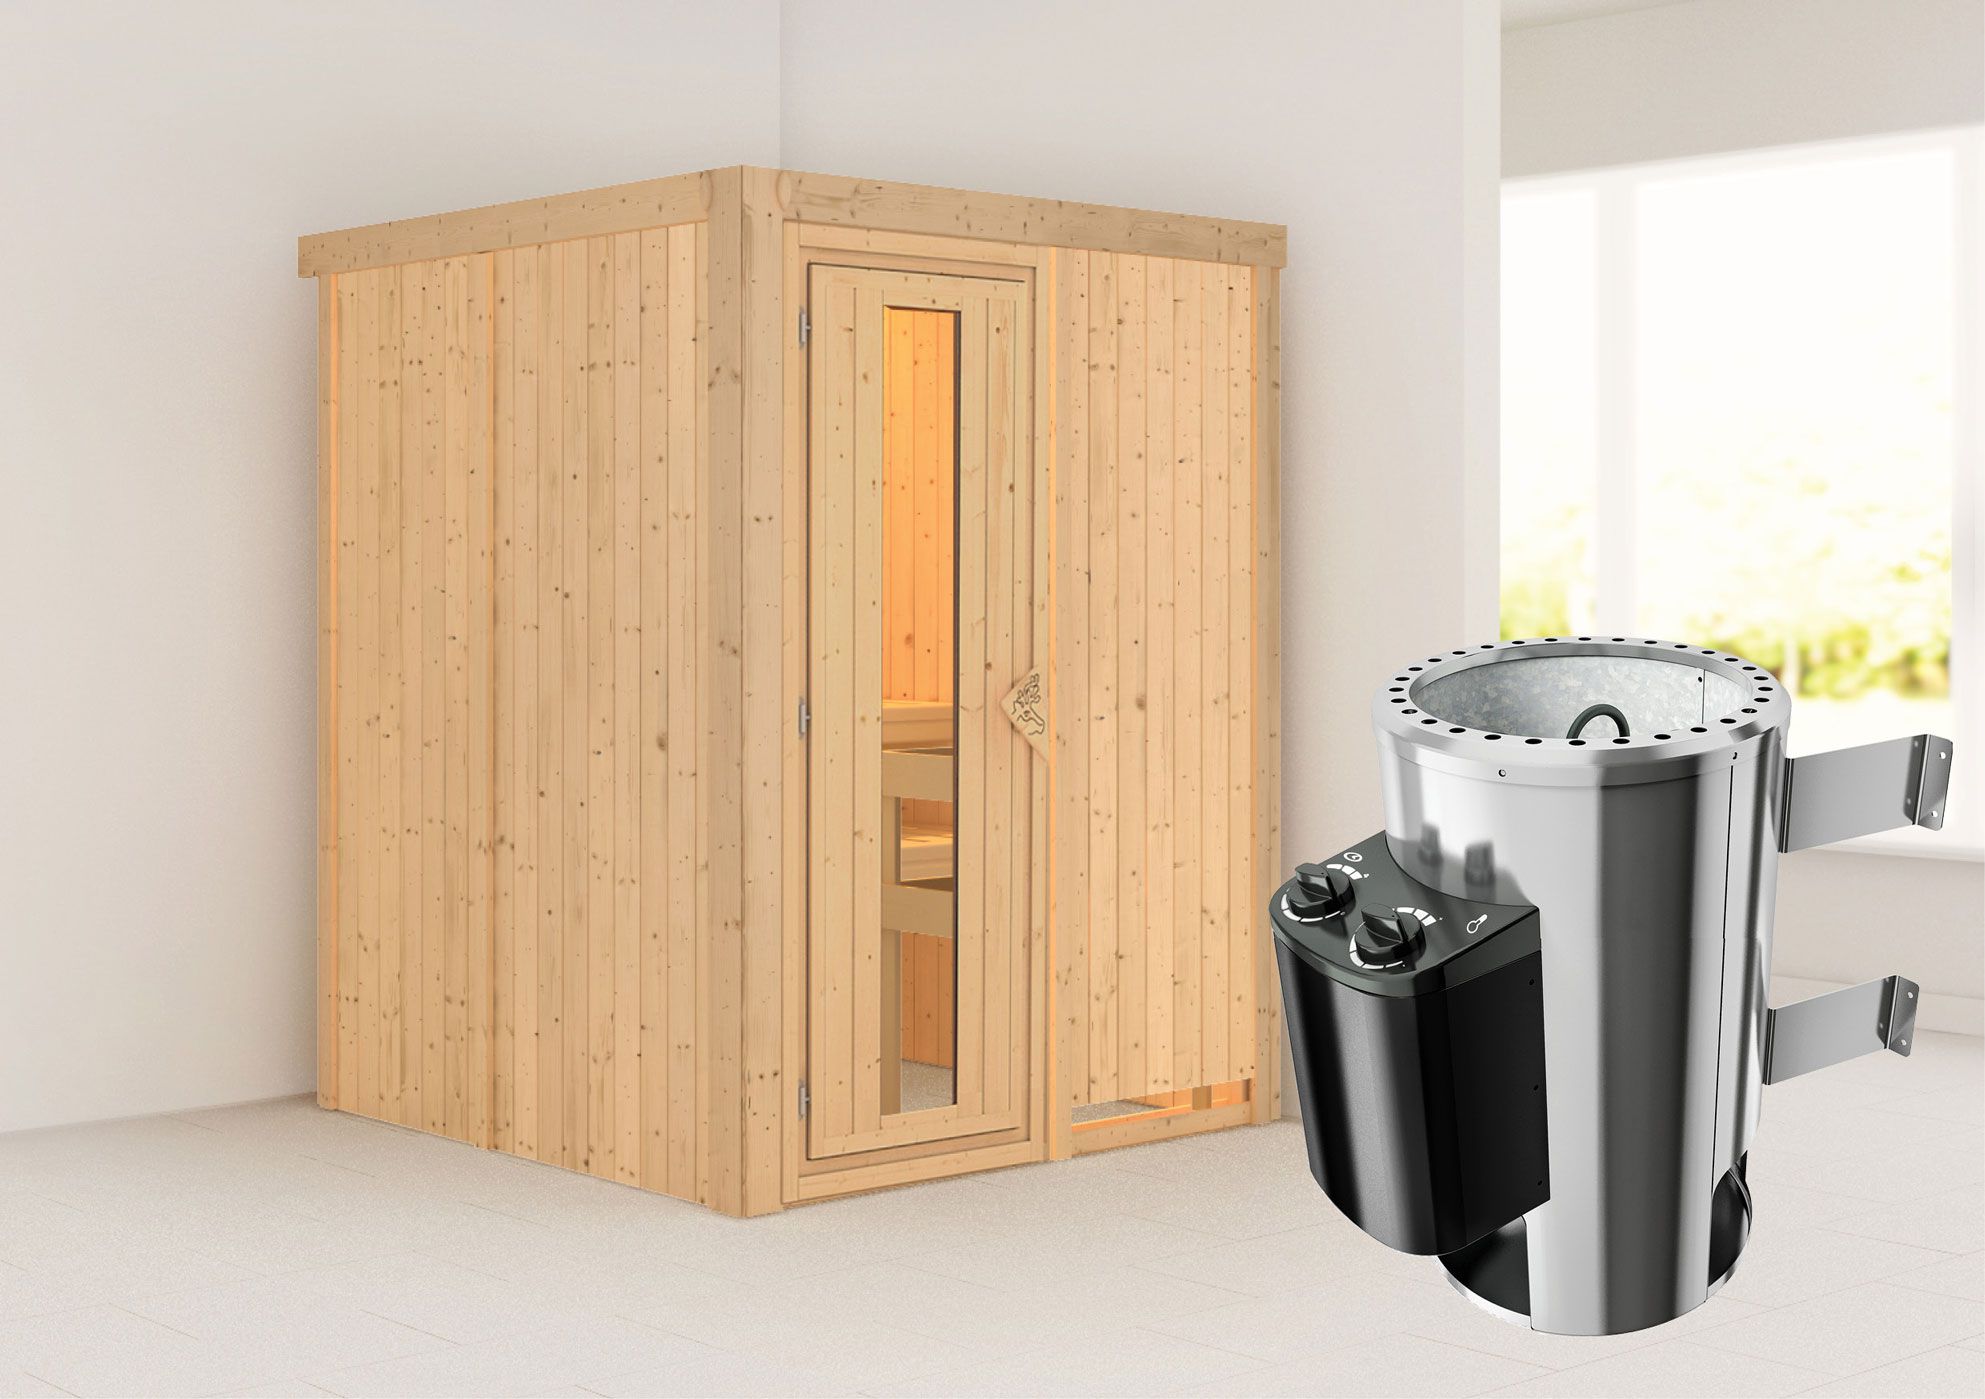 SET-sauna "Joran" met energiebesparende deur en 3,6 kW kachel - 151 x 151 x 198 cm (B x D x H)